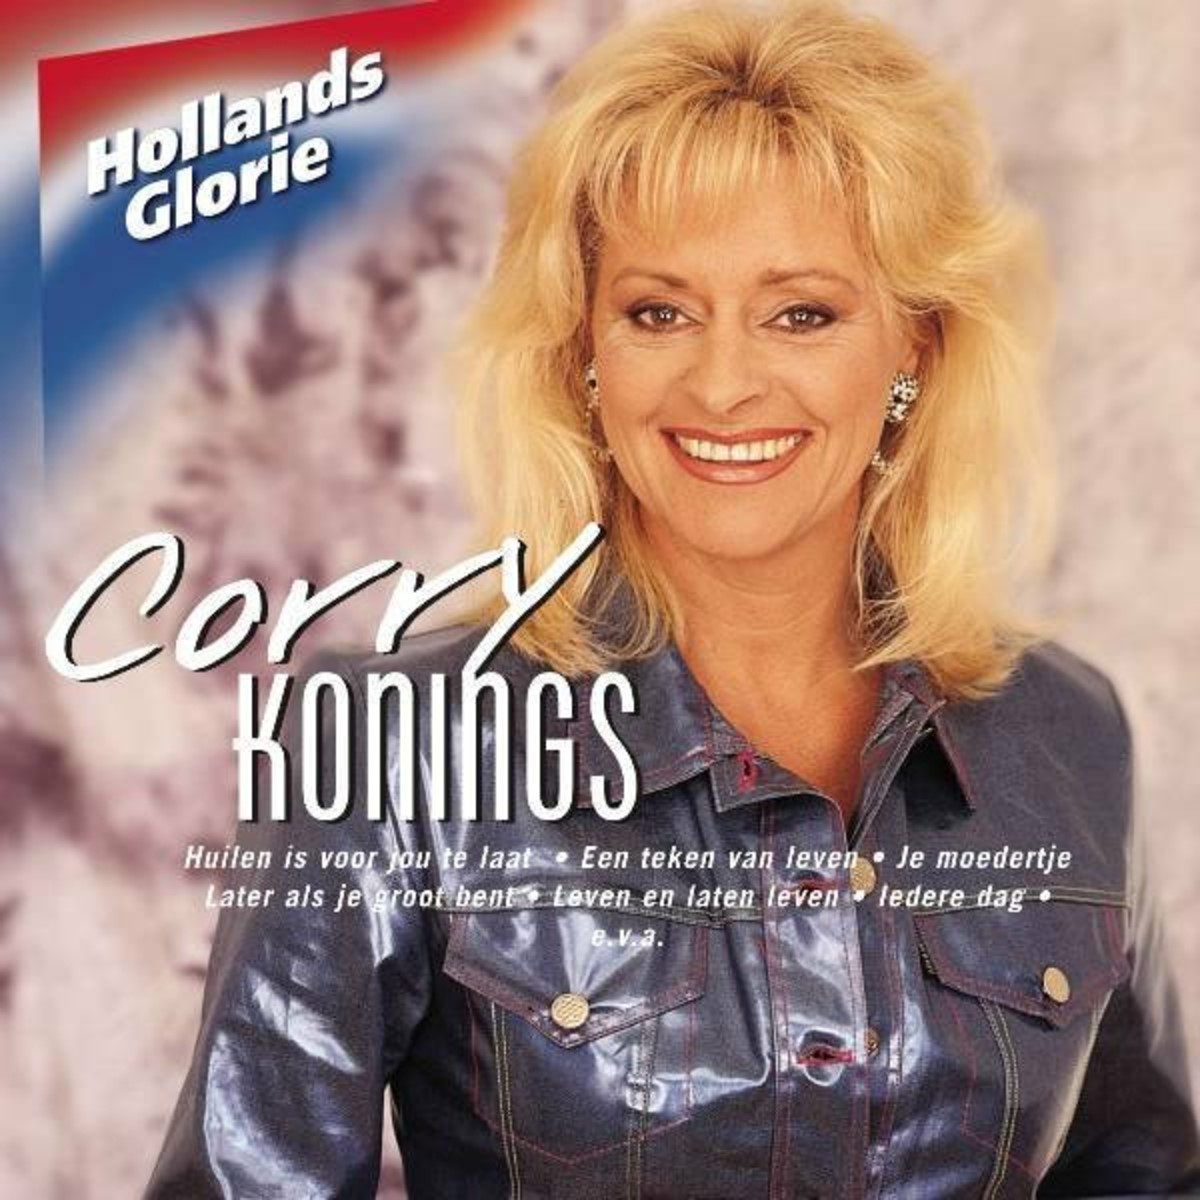 Hollands Glorie - Corry Konings (2006)